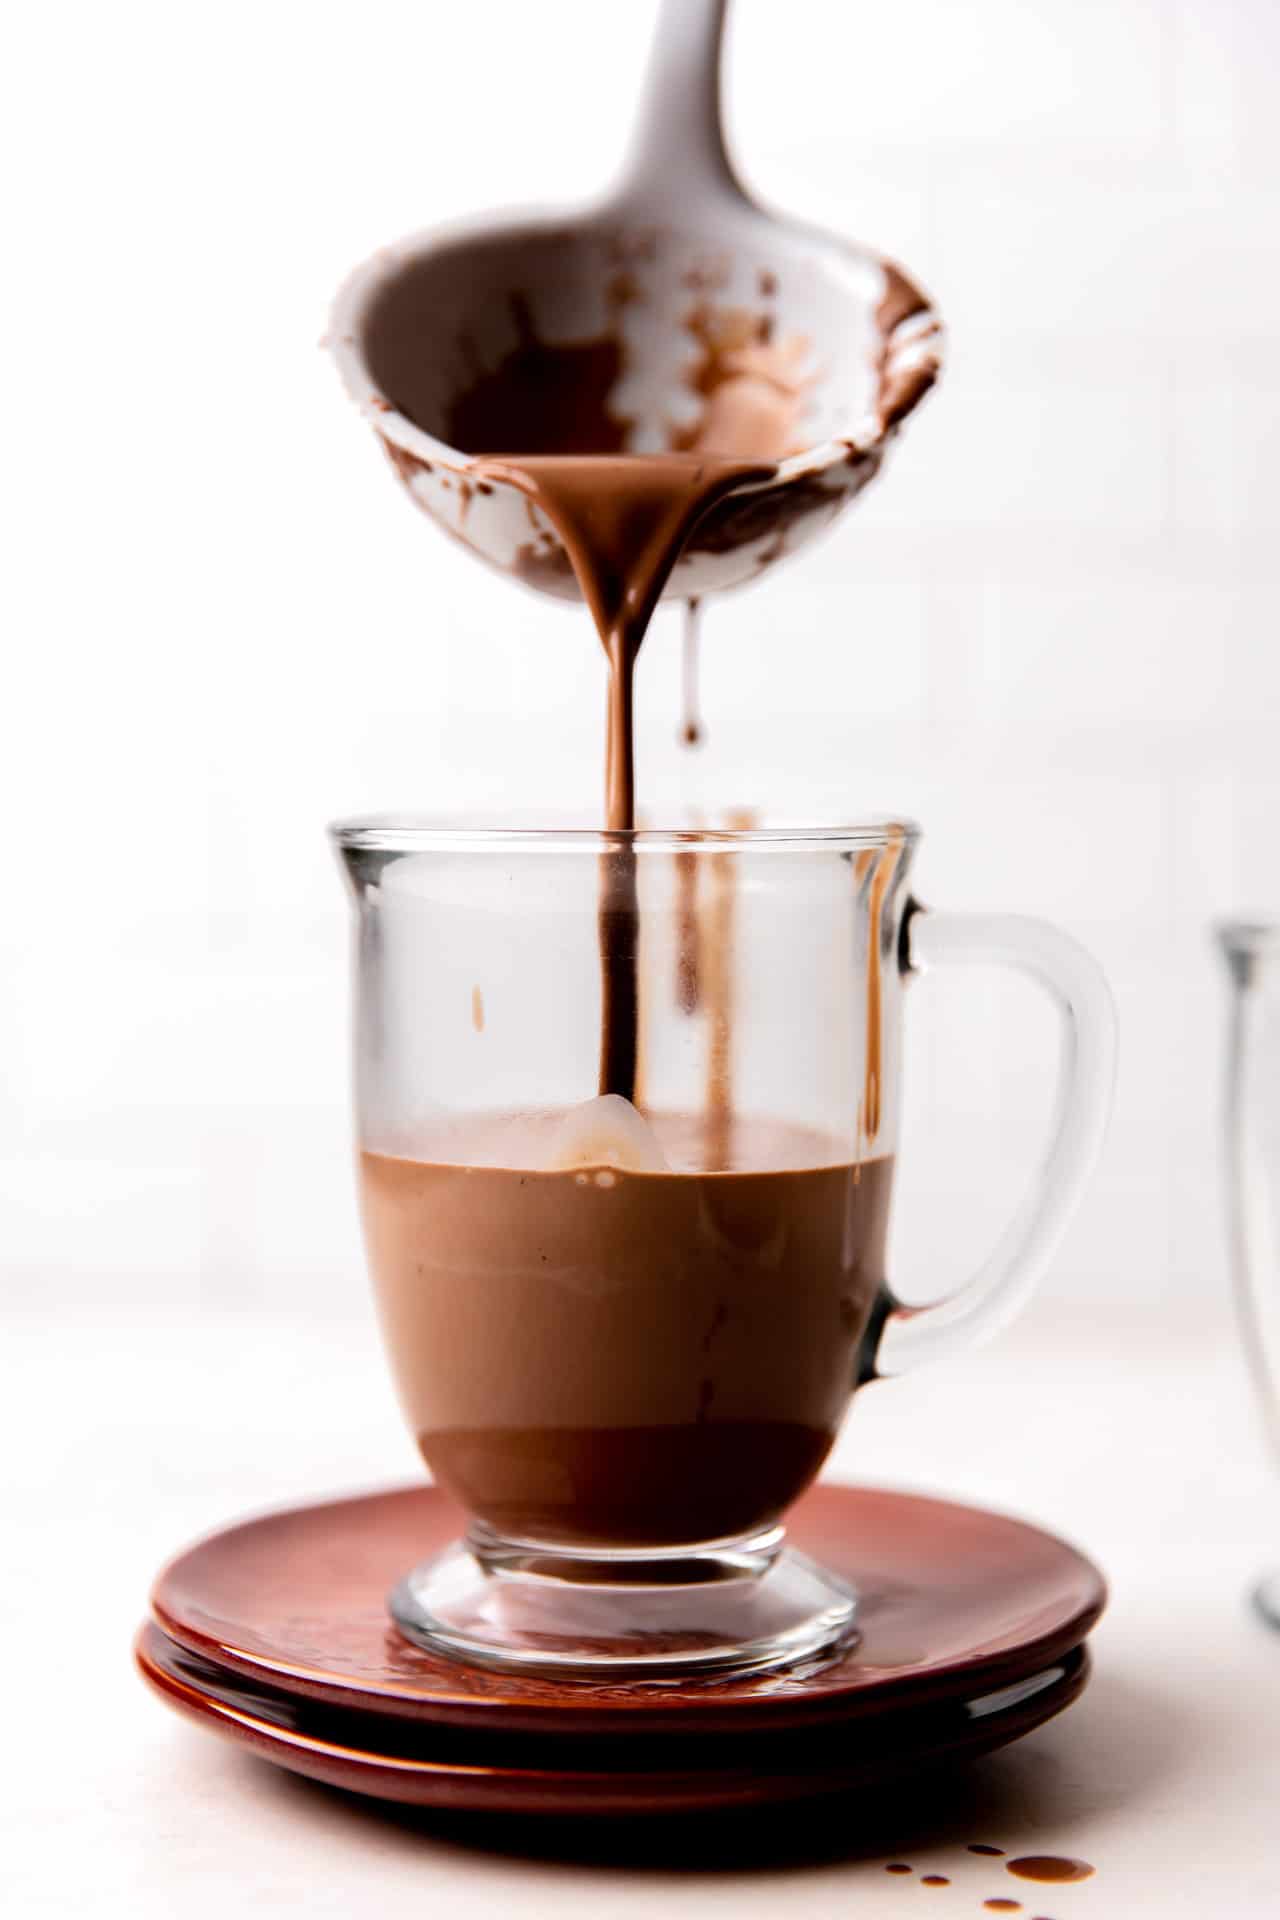 Ladle pouring hot chocolate into a mug.